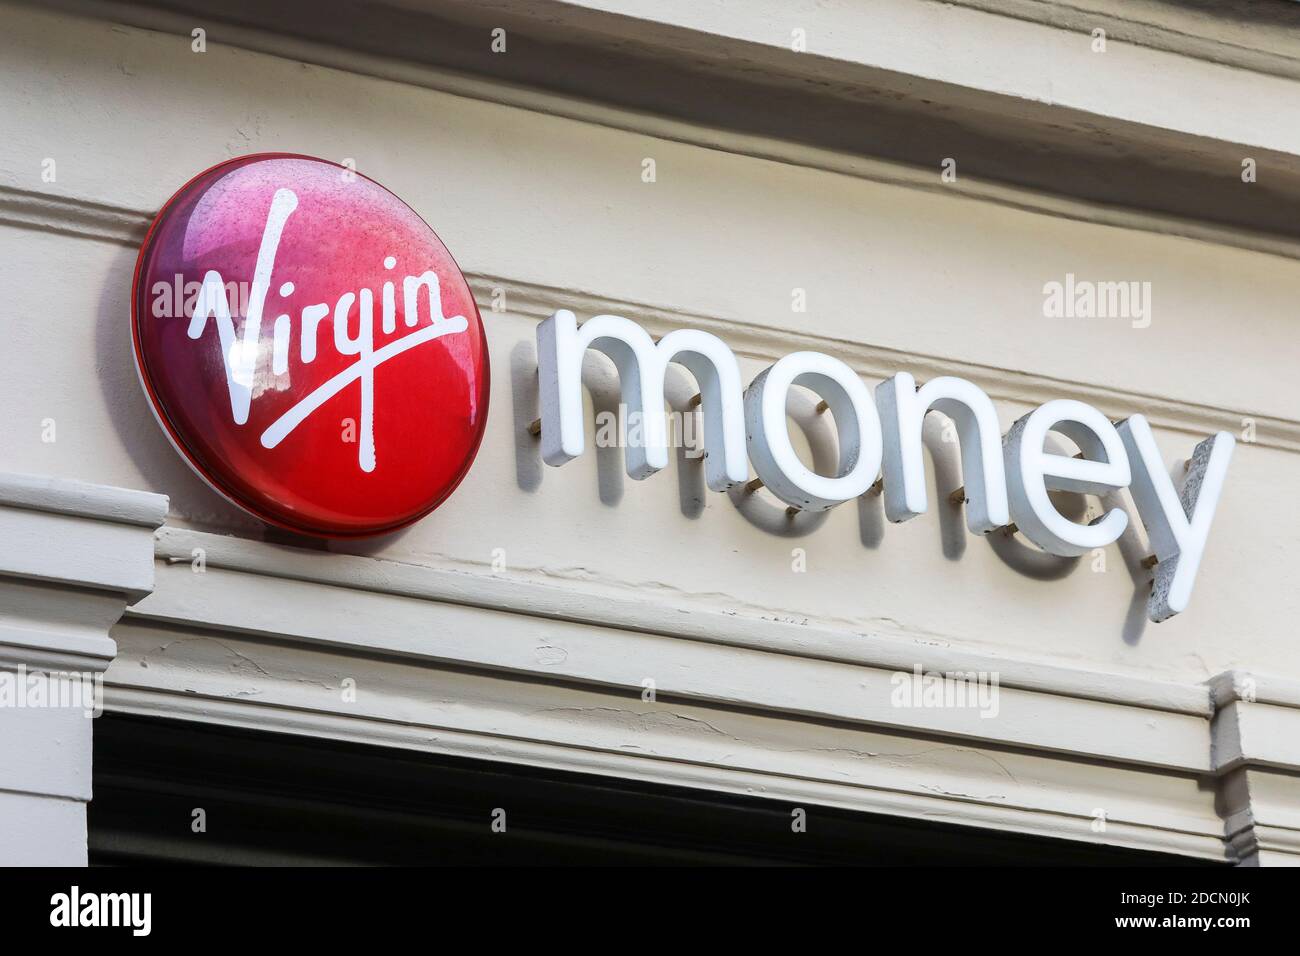 Company logo for the high street bank Virgin Money, Glasgow, UK Stock Photo